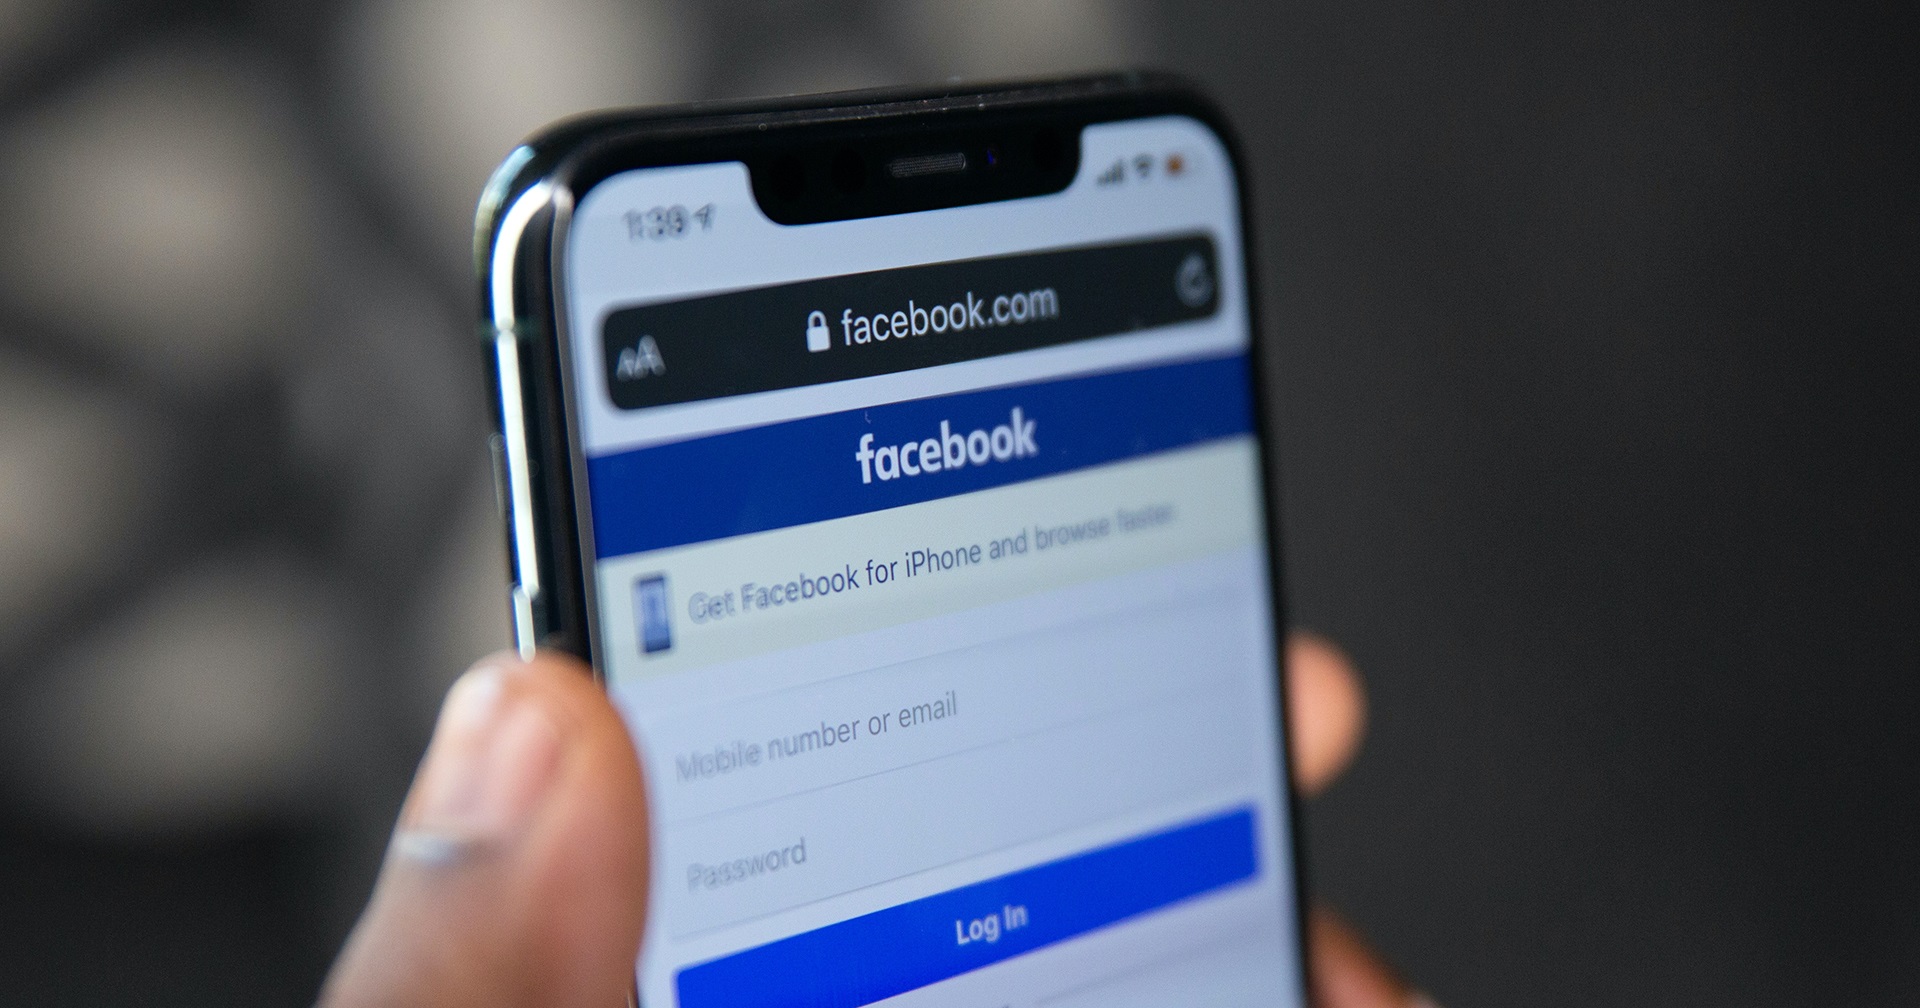 Facebook ยืนยันจะลบข้อมูลมุมมองทางการเมืองและศาสนาออกจากโปรไฟล์ใน 1 ธ.ค.